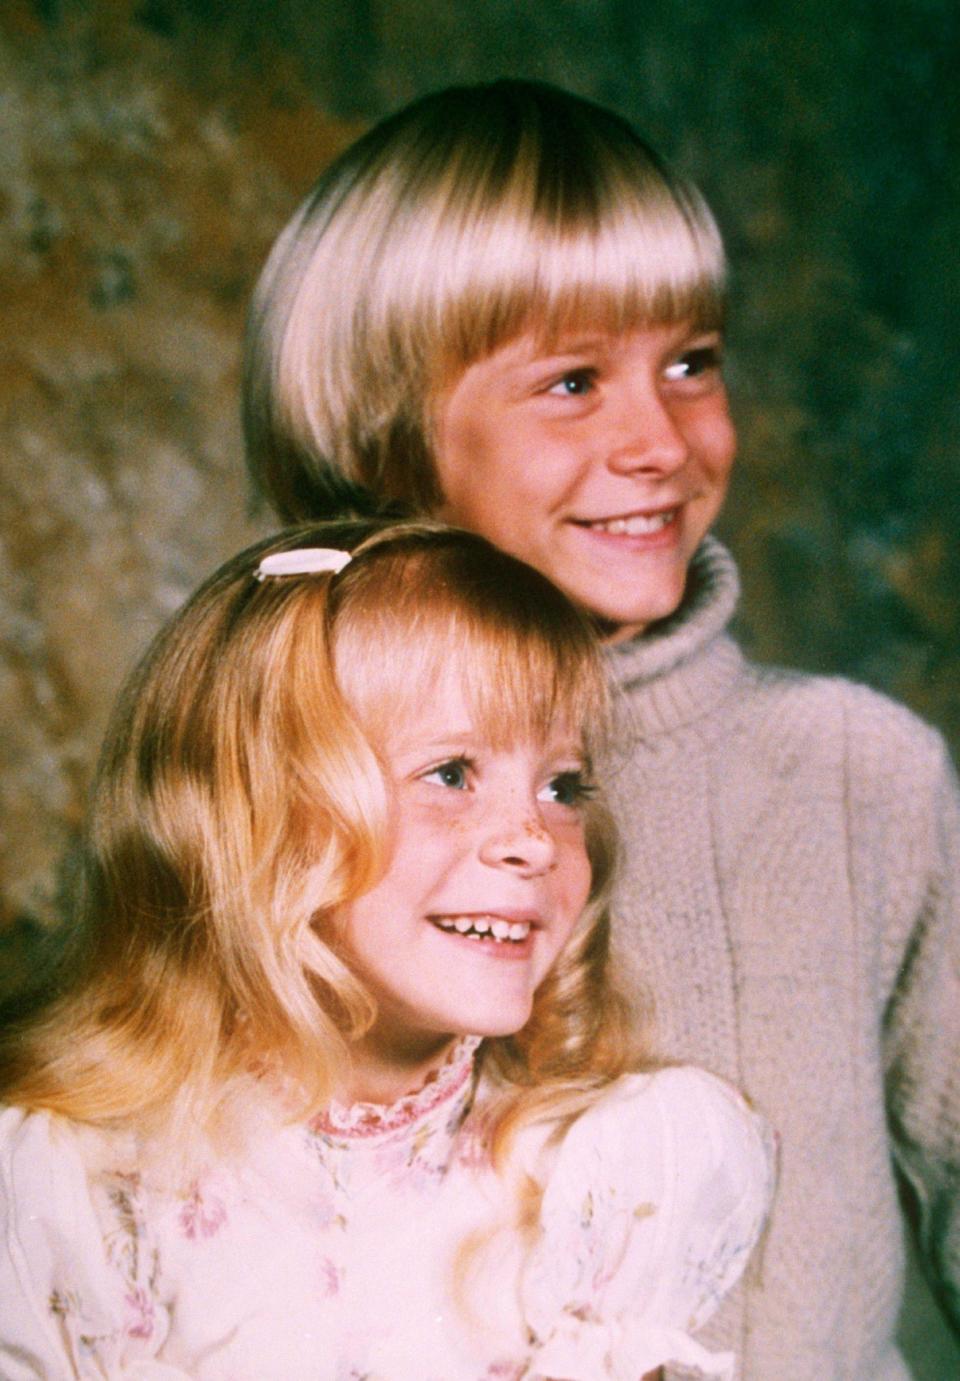 Kurt Cobain with his sister Kimberly